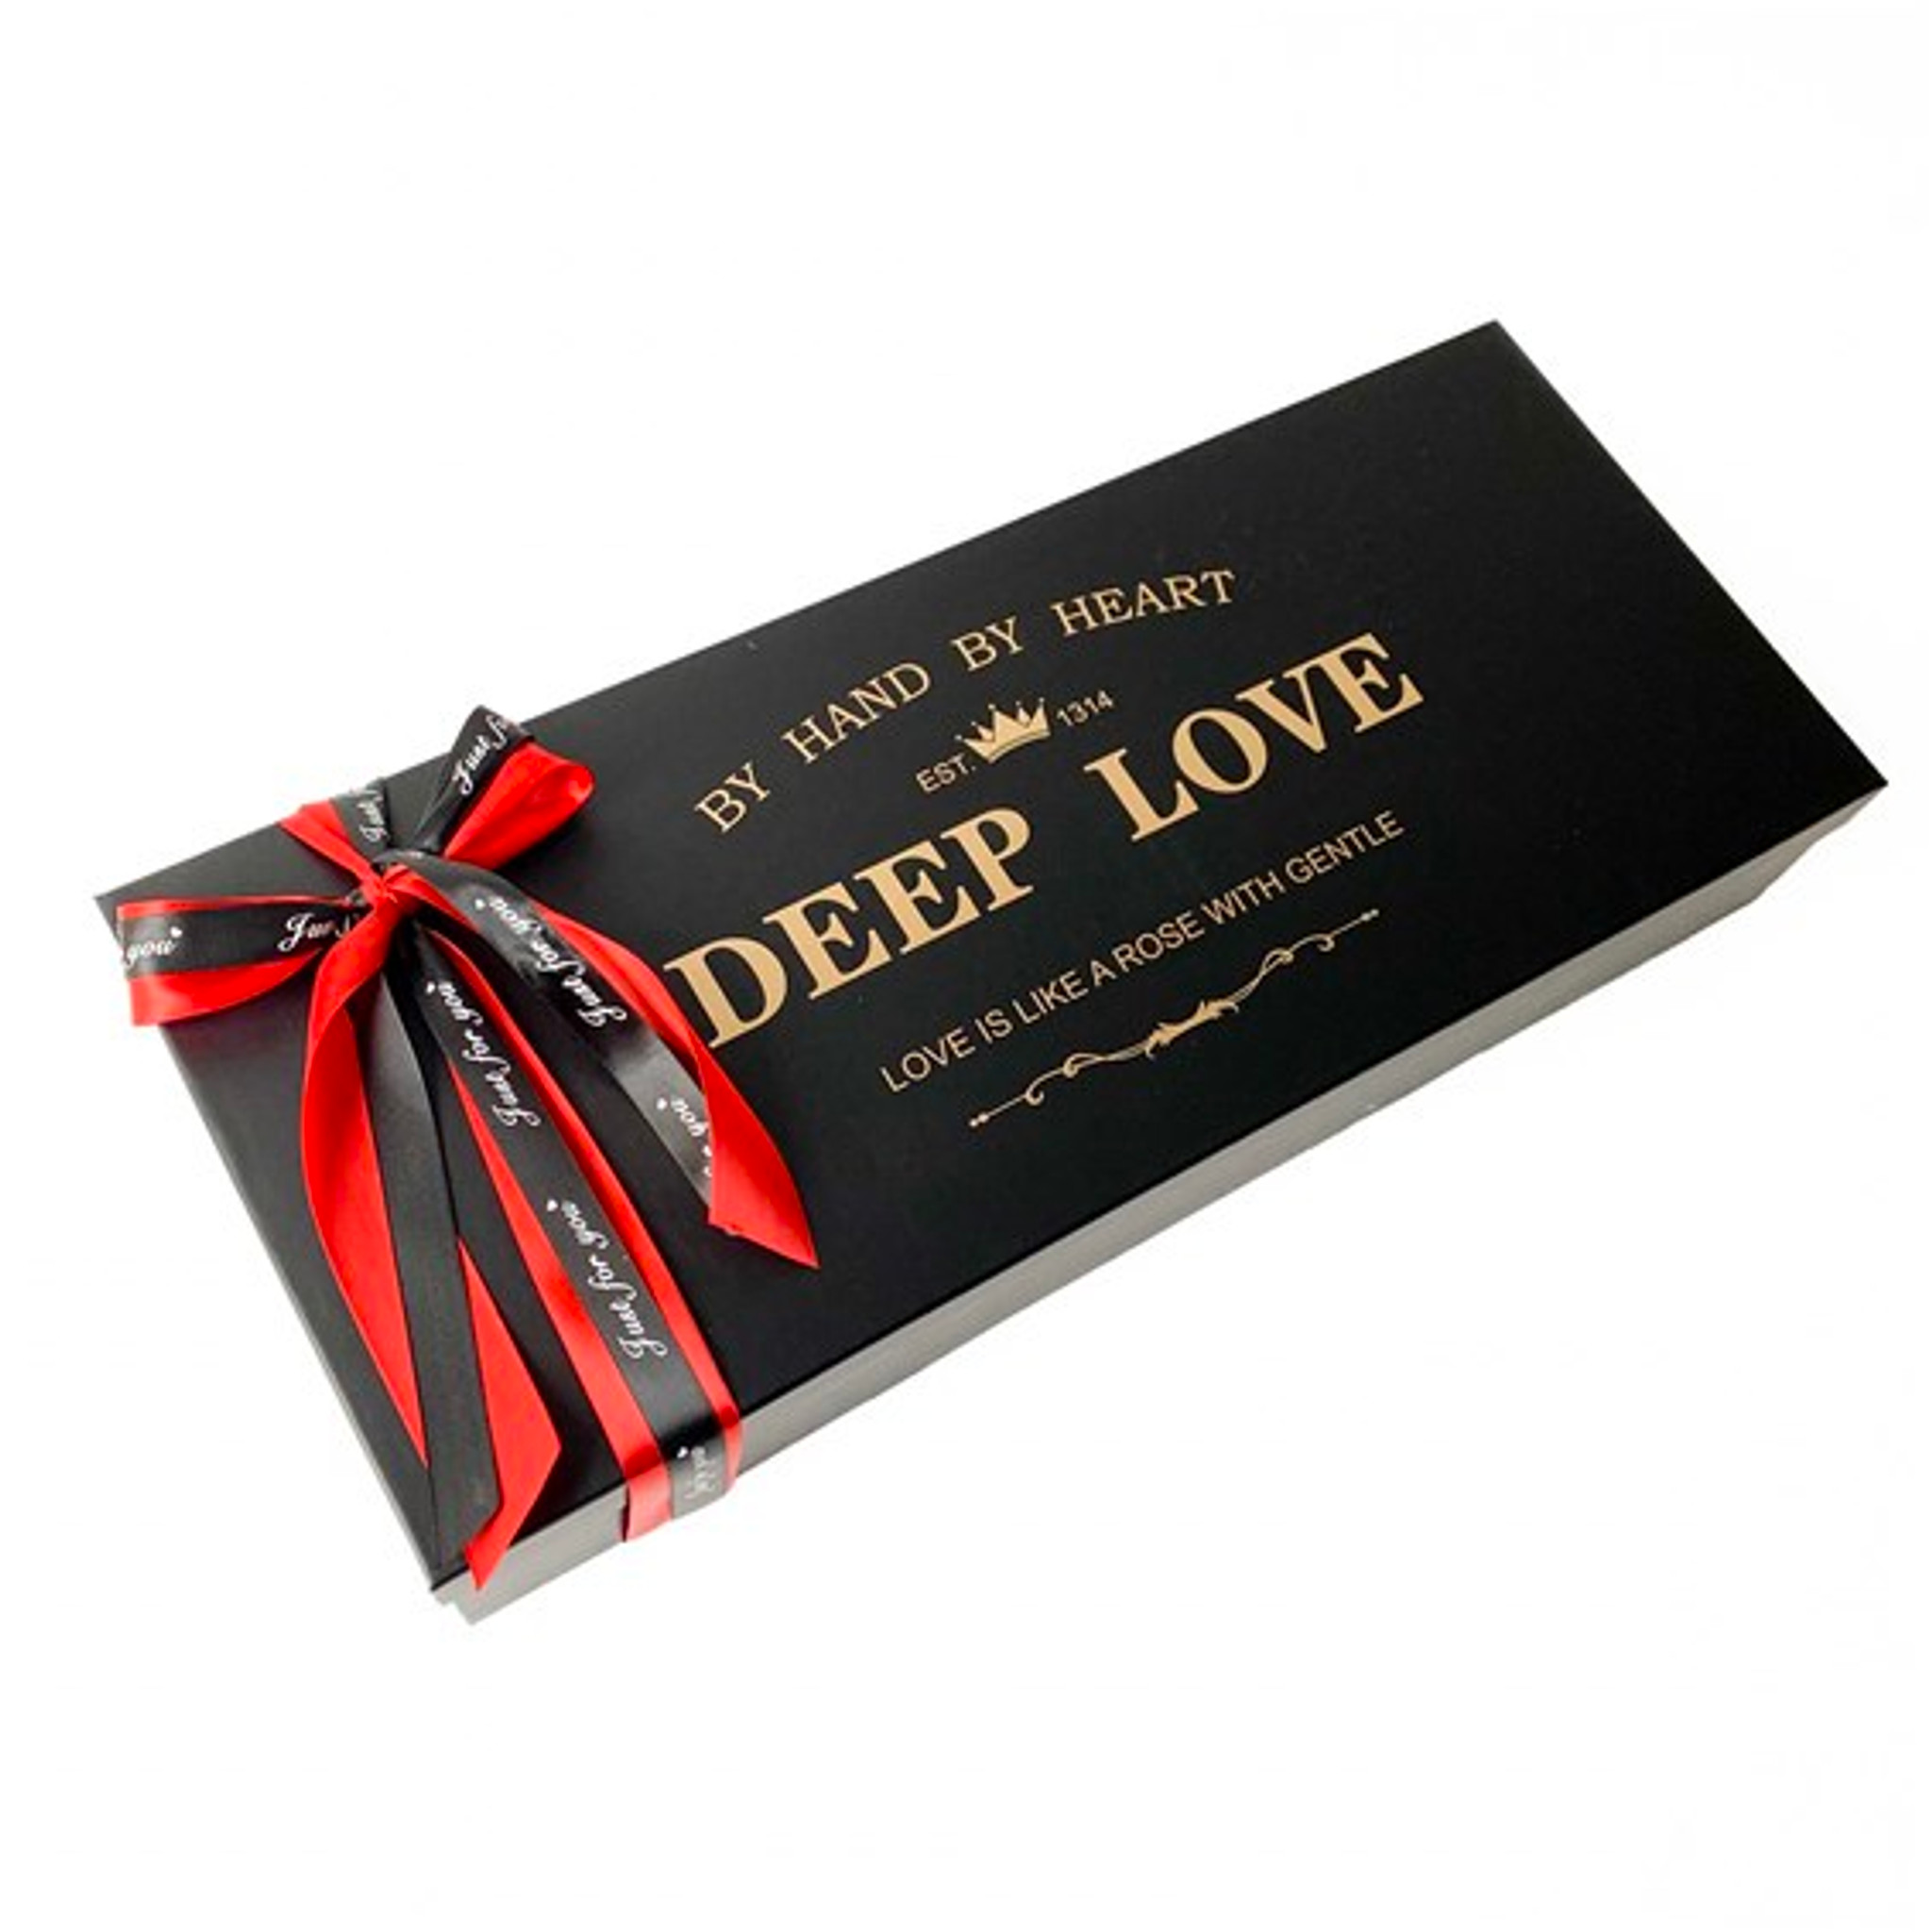 I love You Deep Love Flower Box - Black